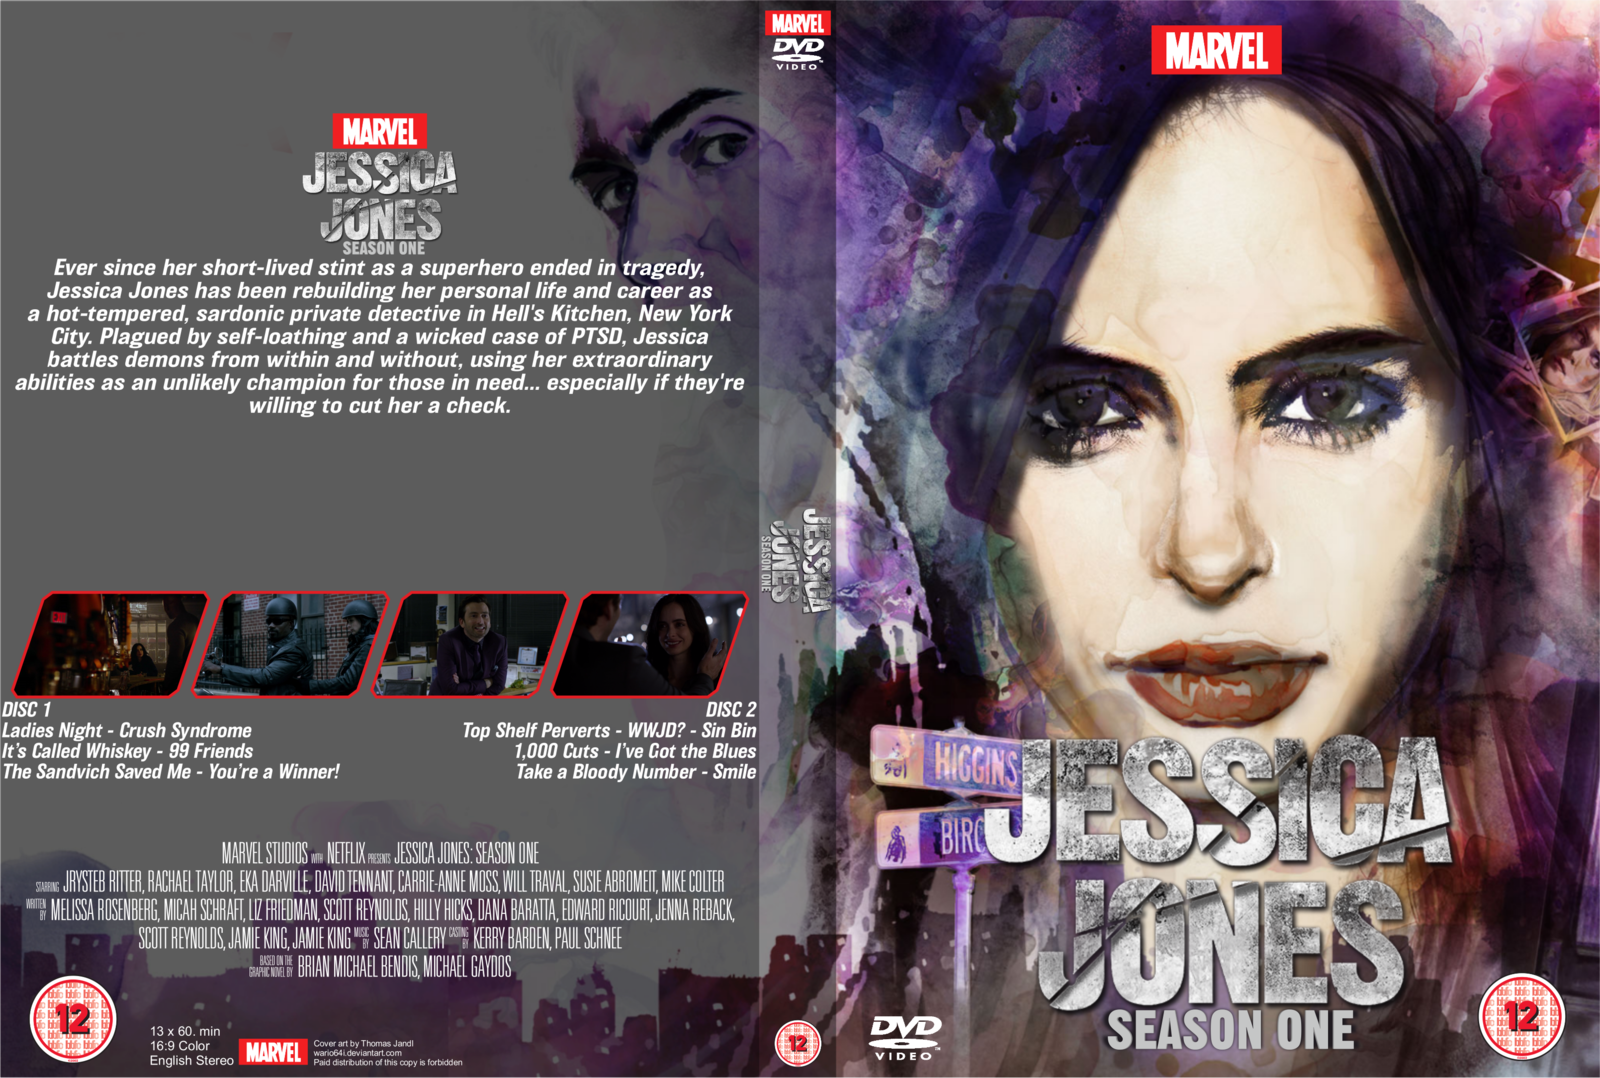 Jessica Jones Season One Dvd Cover By Wario64i